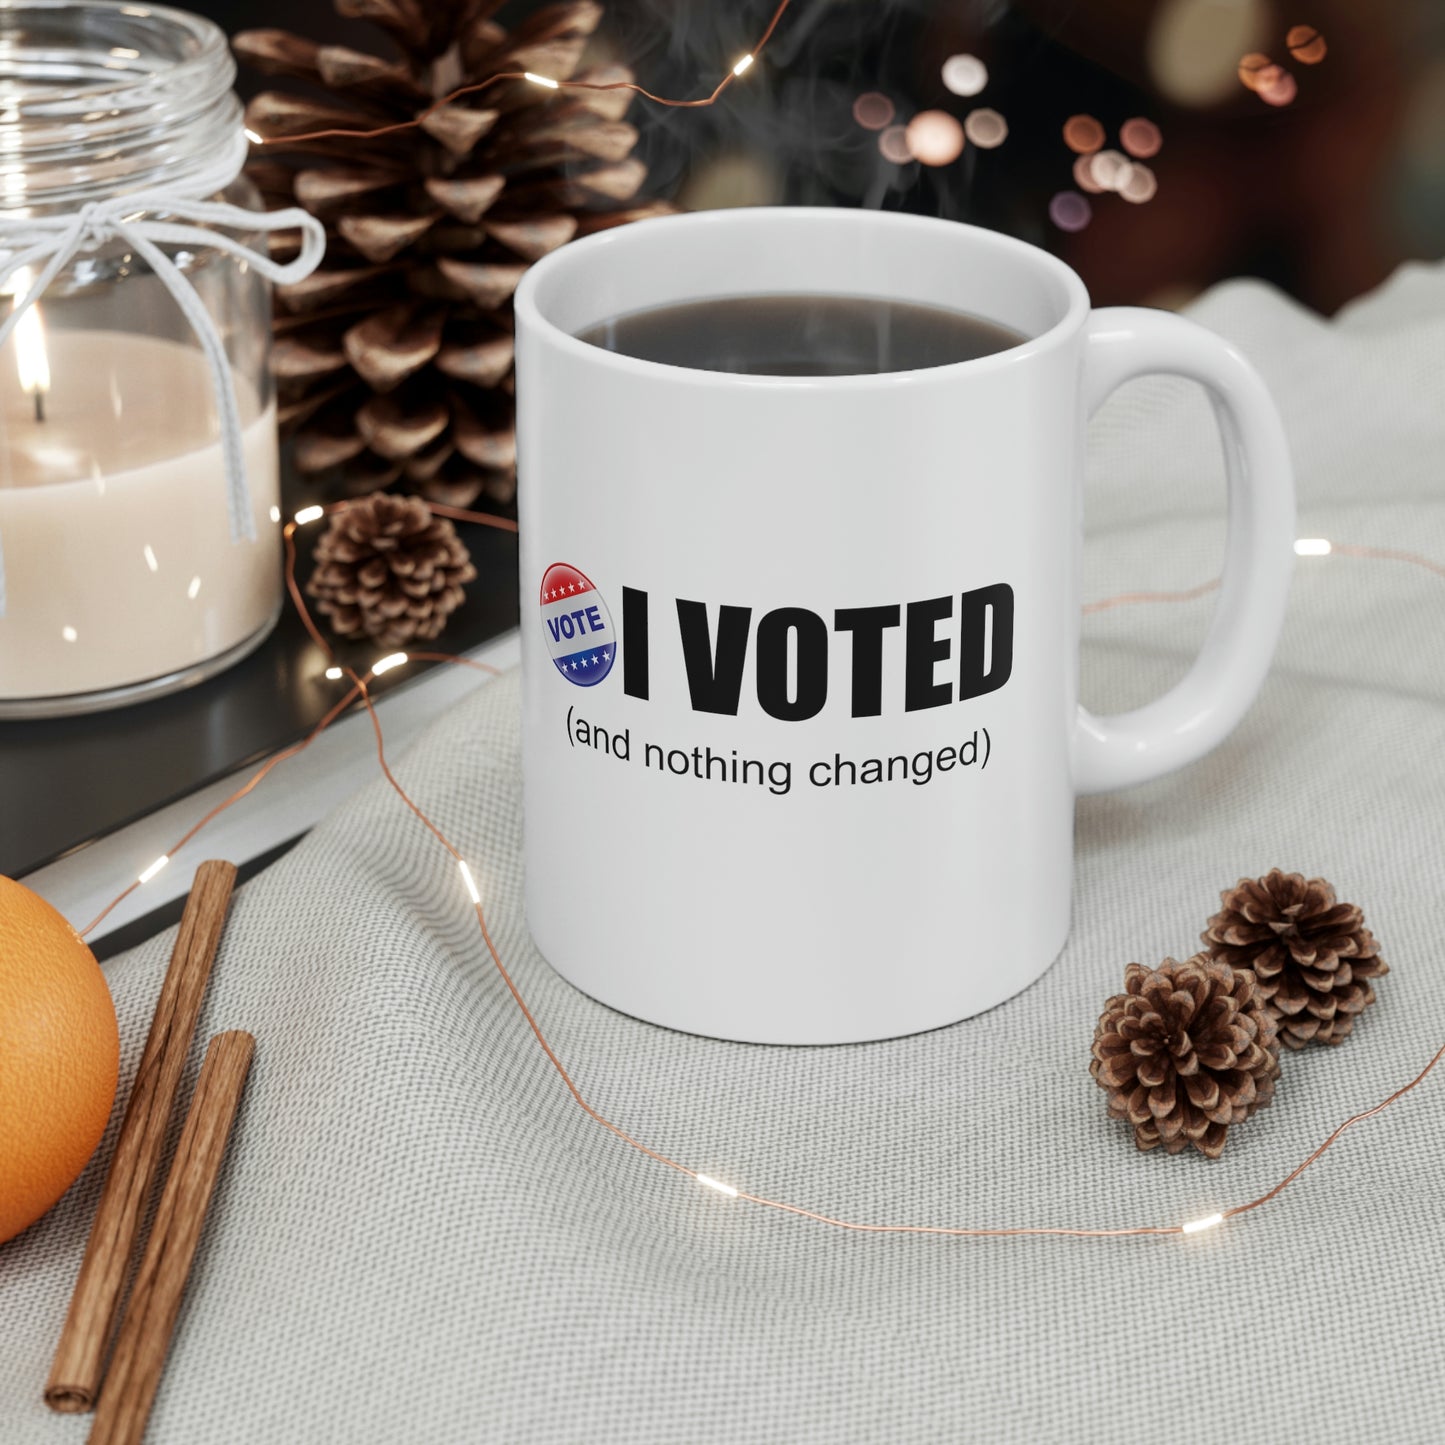 I Voted and nothing changed Ceramic Mug 11oz Funny Political Coffee Mug Tea Cup